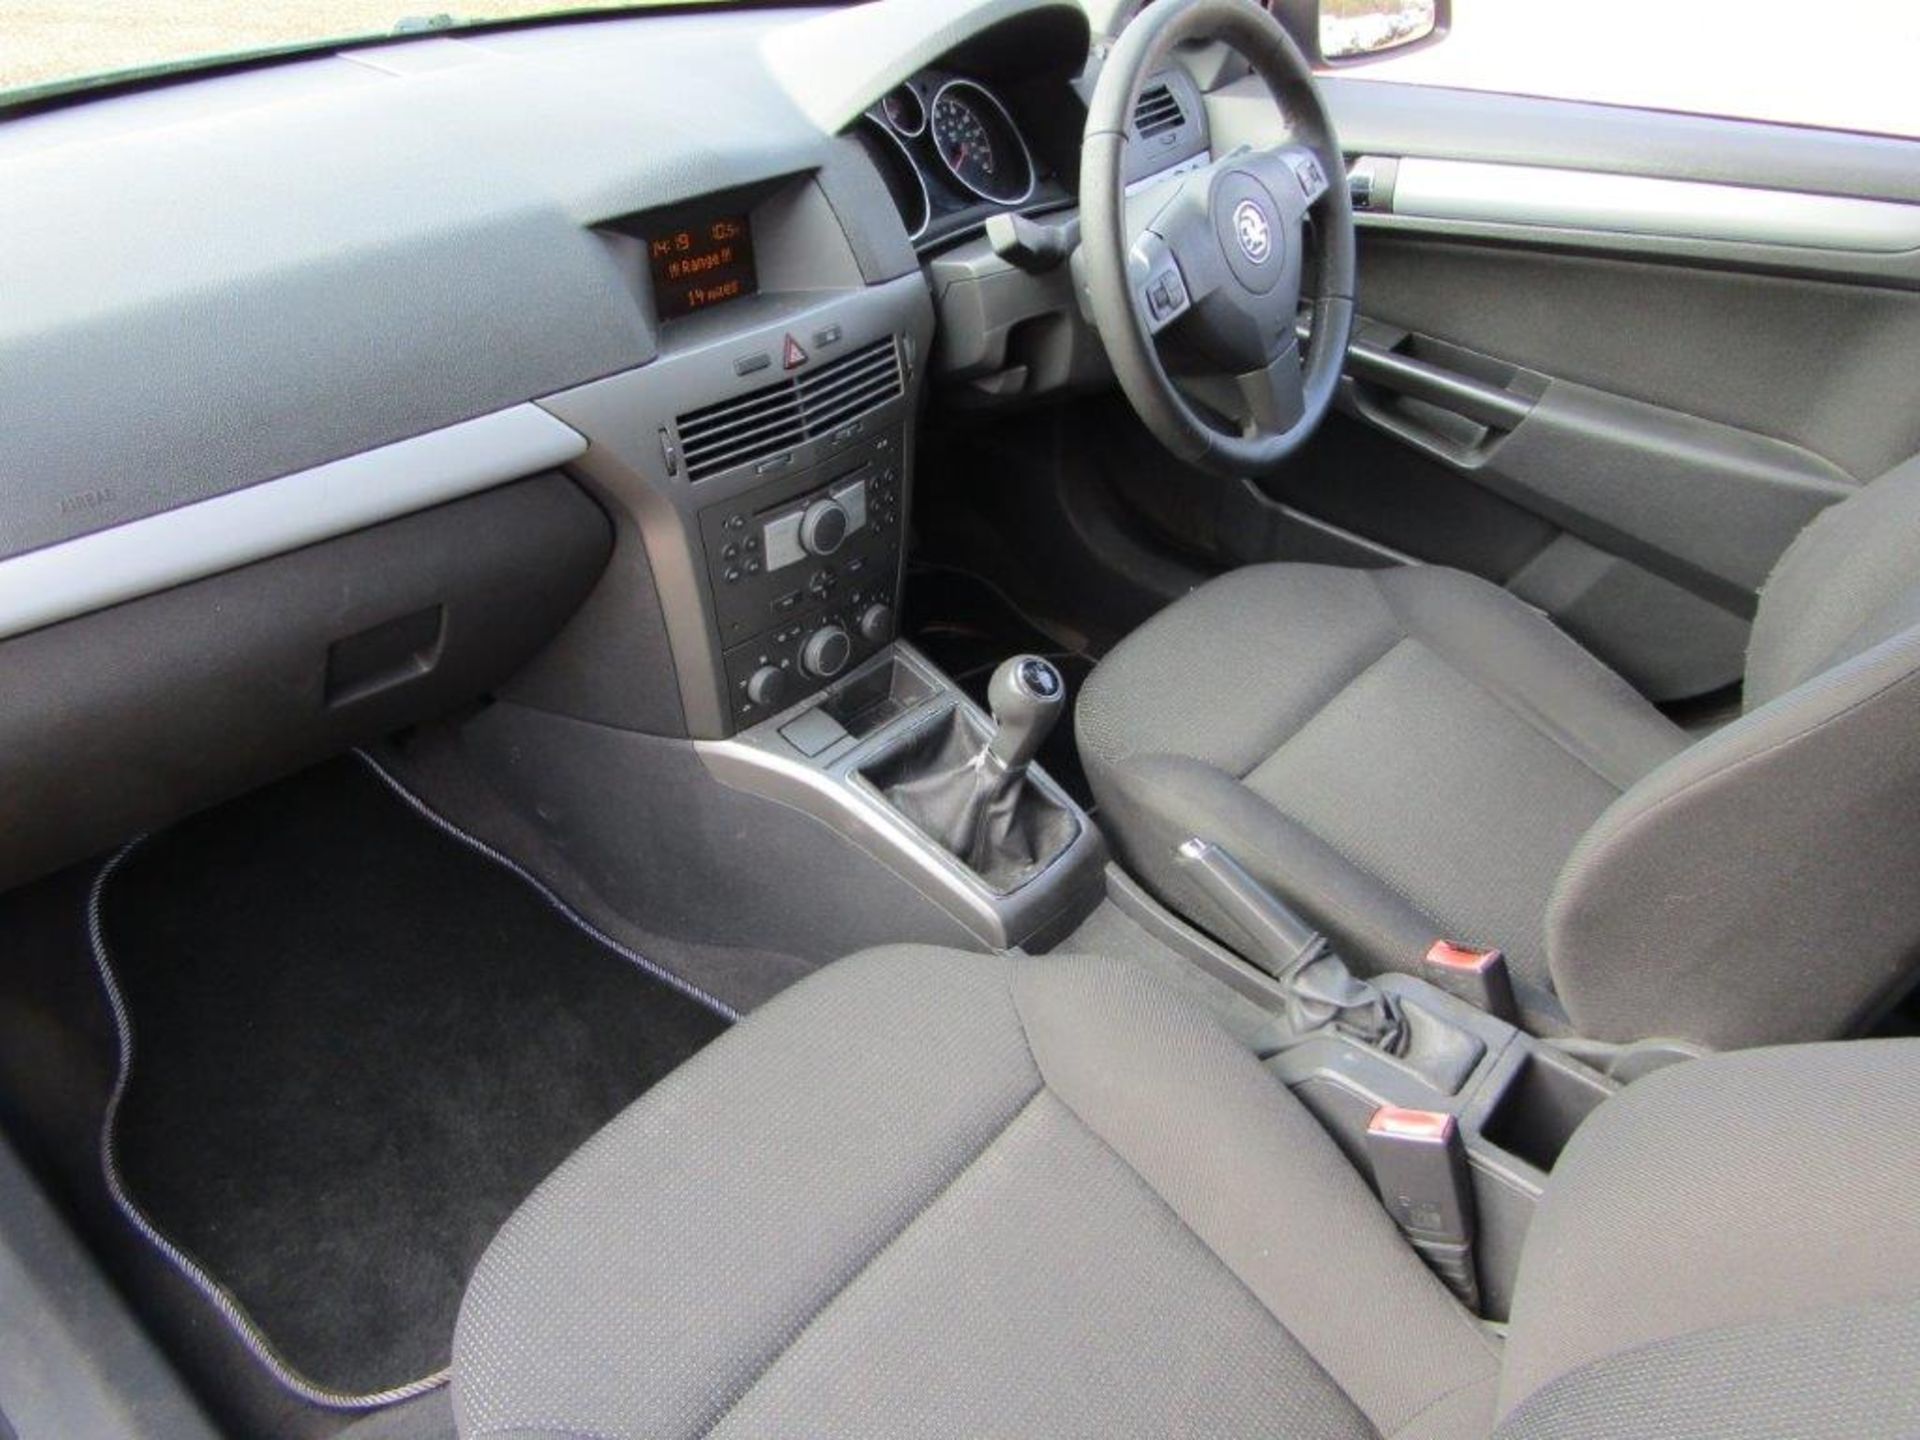 06 06 Vauxhall Astra Breeze - Image 19 of 21